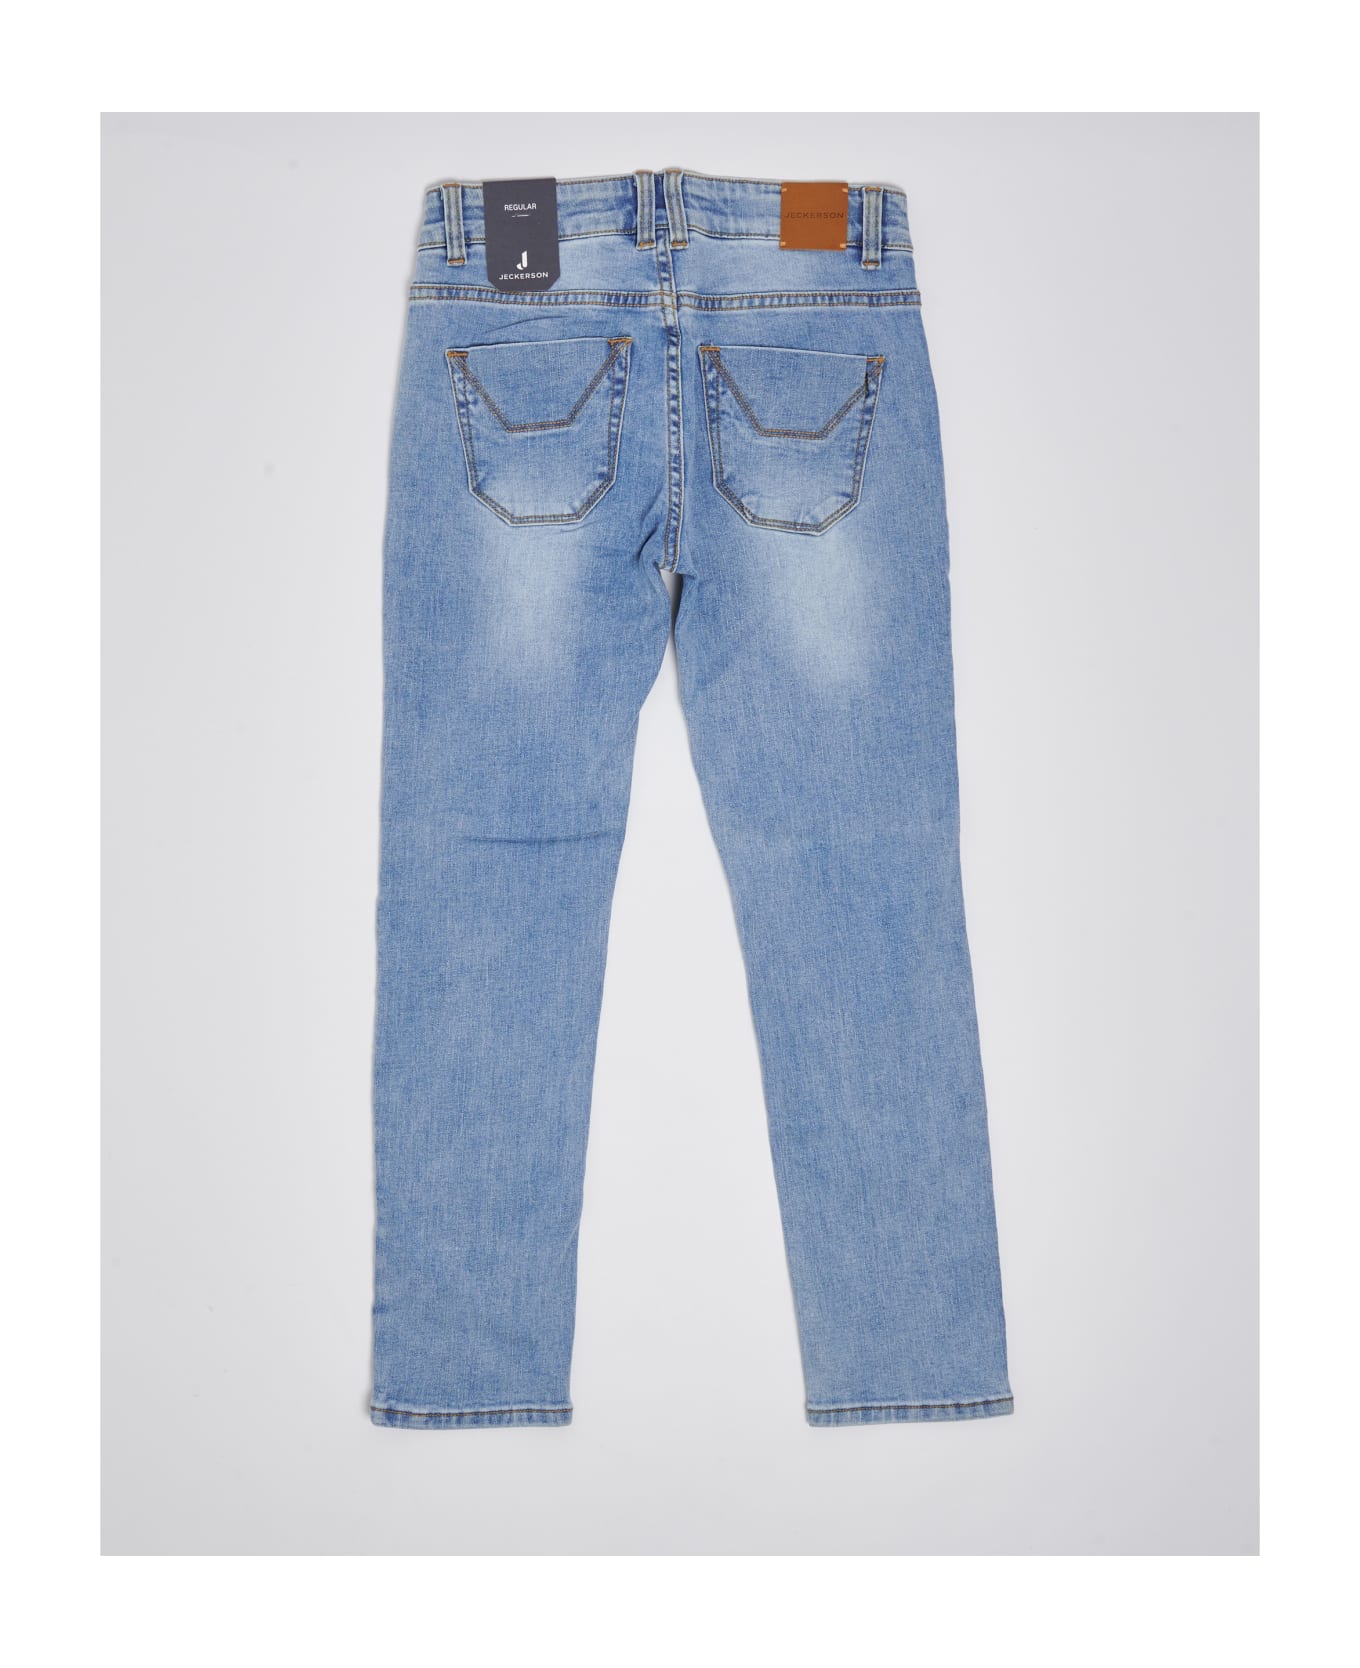 Jeckerson Jeans Jeans - DENIM CHIARO ボトムス